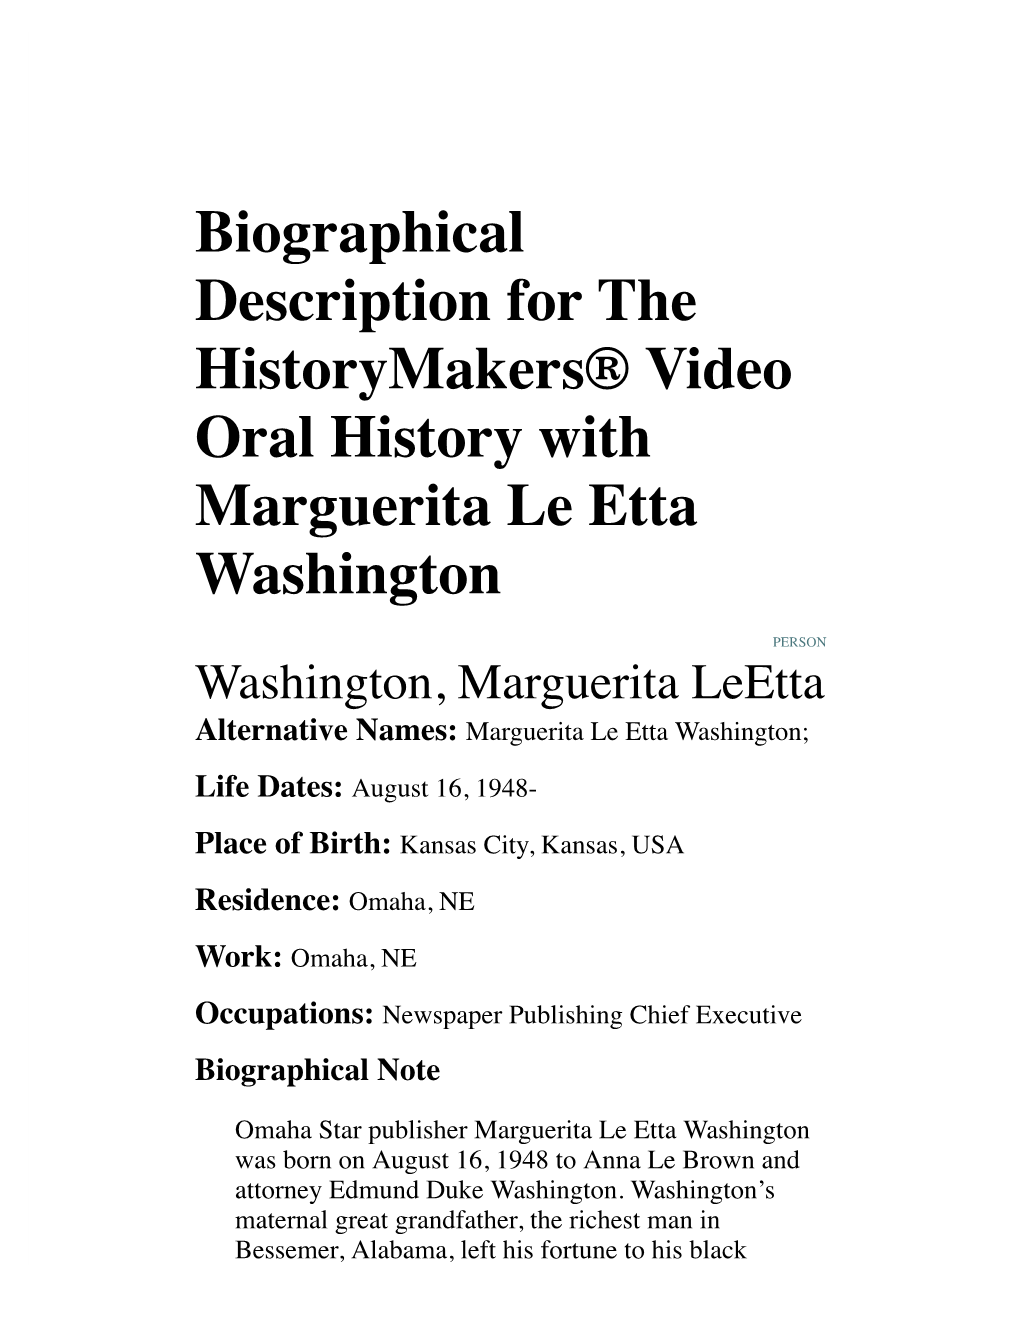 Biographical Description for the Historymakers® Video Oral History with Marguerita Le Etta Washington